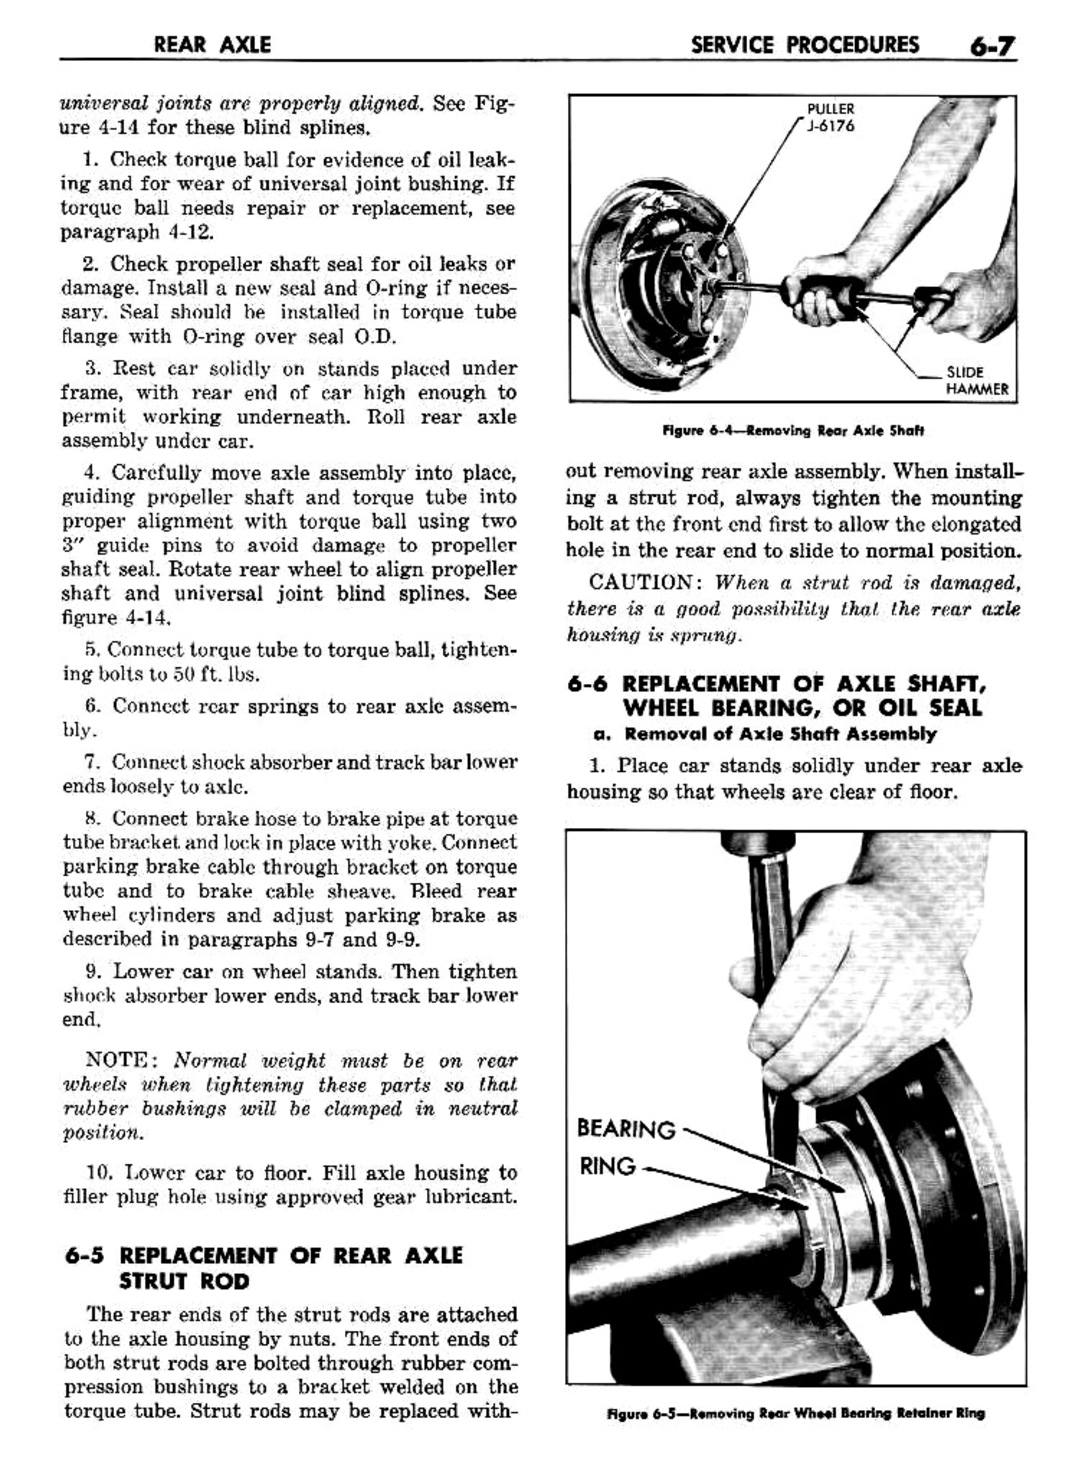 n_07 1960 Buick Shop Manual - Rear Axle-007-007.jpg